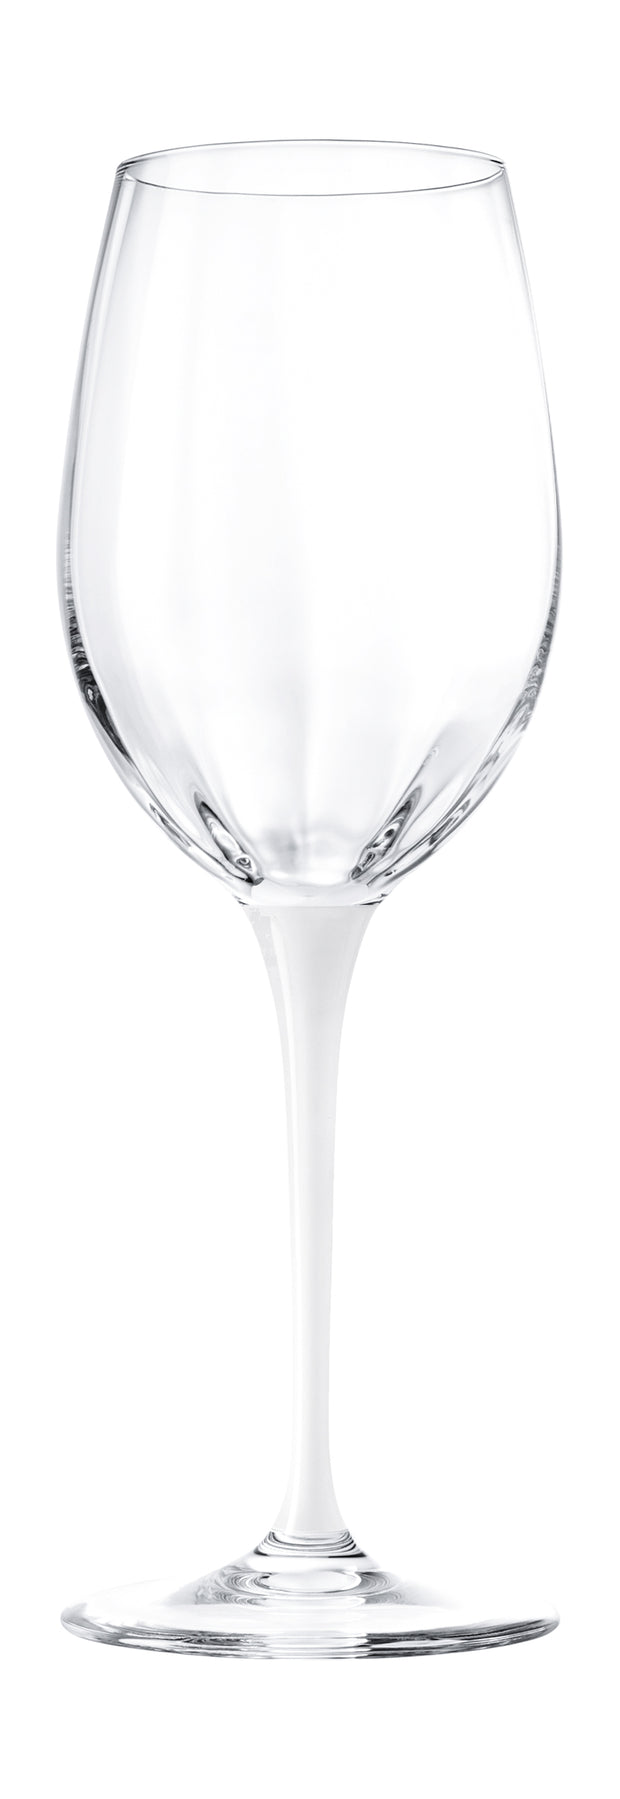 Royalty Art European Stemless White Wine Cups (4-Piece Set) Classic Craftsmanship, Elegant Hosting Glassware , Modern, Heavy-Duty Borosilicate Glass